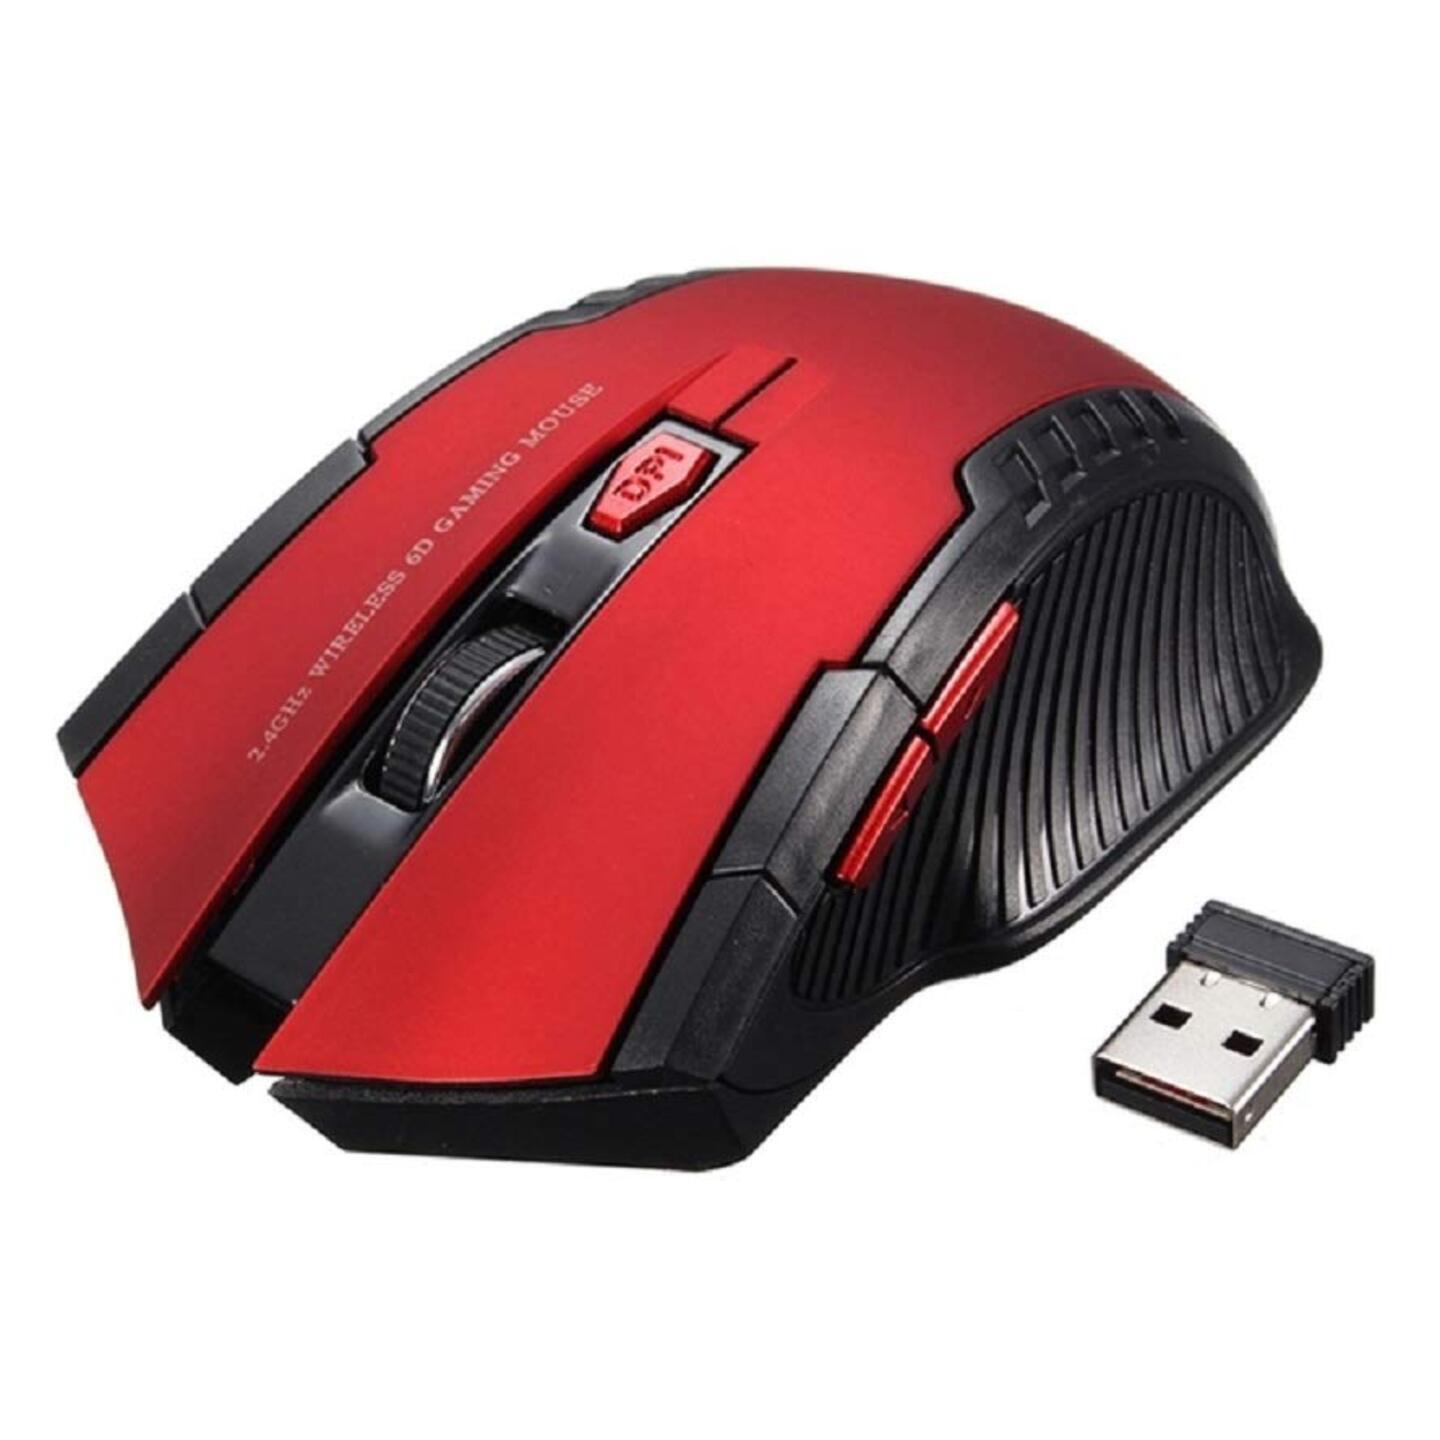 Ergonomic Design 6 Keys Wireless Gamming Mouse with adjustable DPI 800/1200/1600